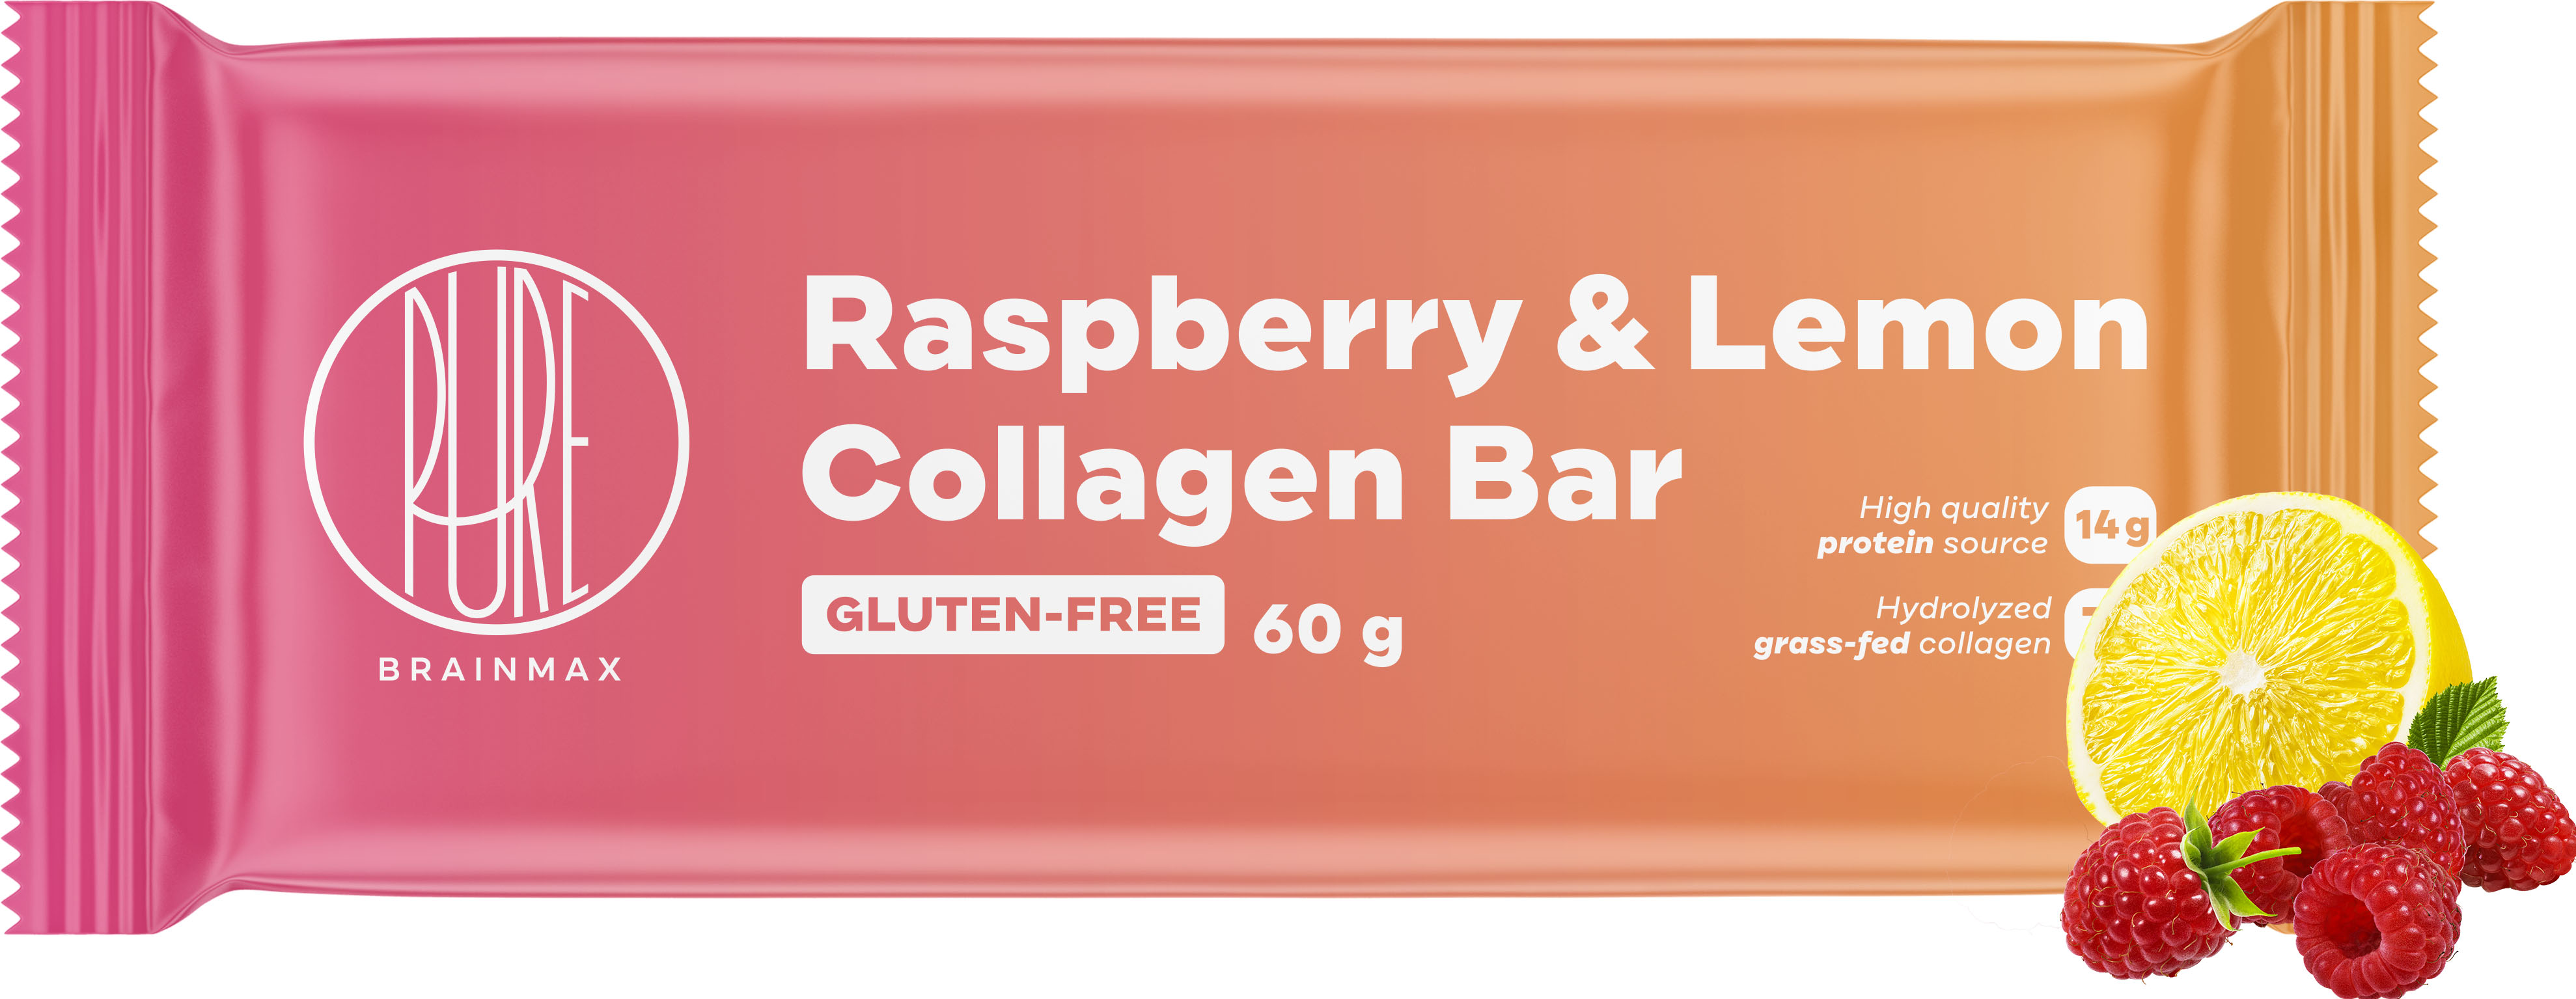 BrainMax Pure Raspberry & Lemon Collagen Bar, Kolagenová tyčinka, Malina a citron, 60 g 7 g grass-fed kolagenu, 14 g bílkovin, 11 g vlákniny